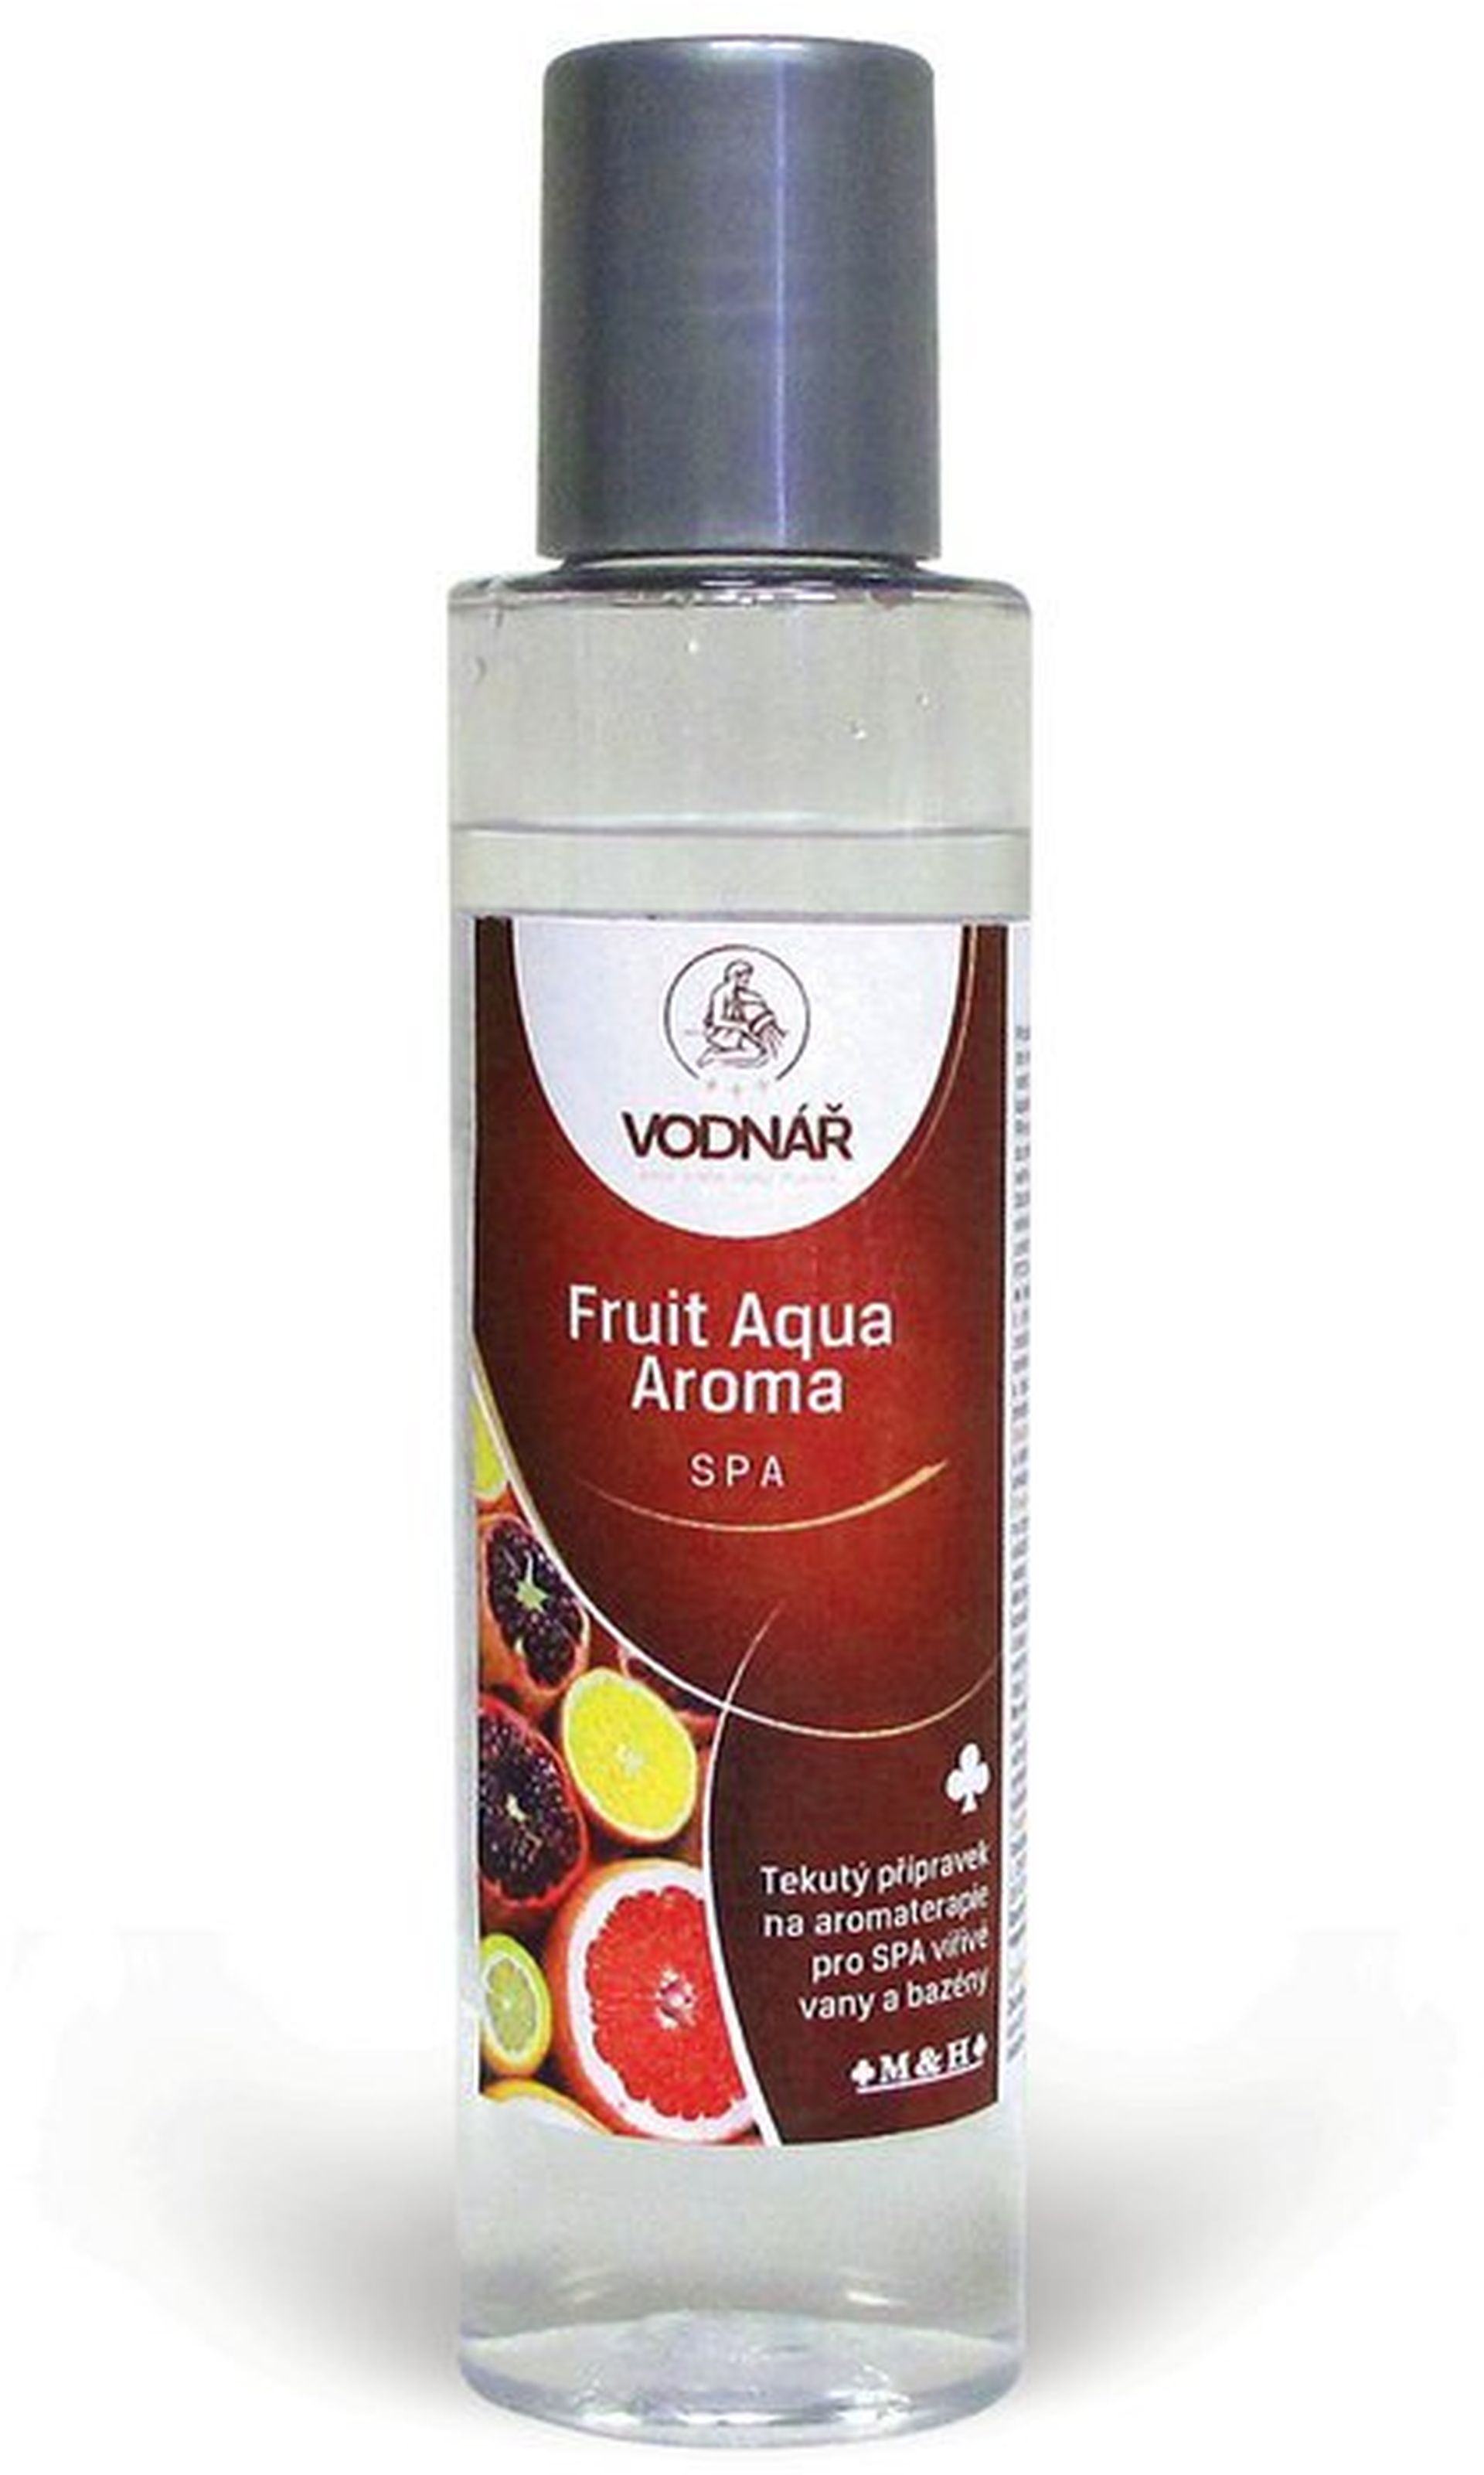 VODNÁŘ Aroma Fruit Aqua SPA 125ml 791040000